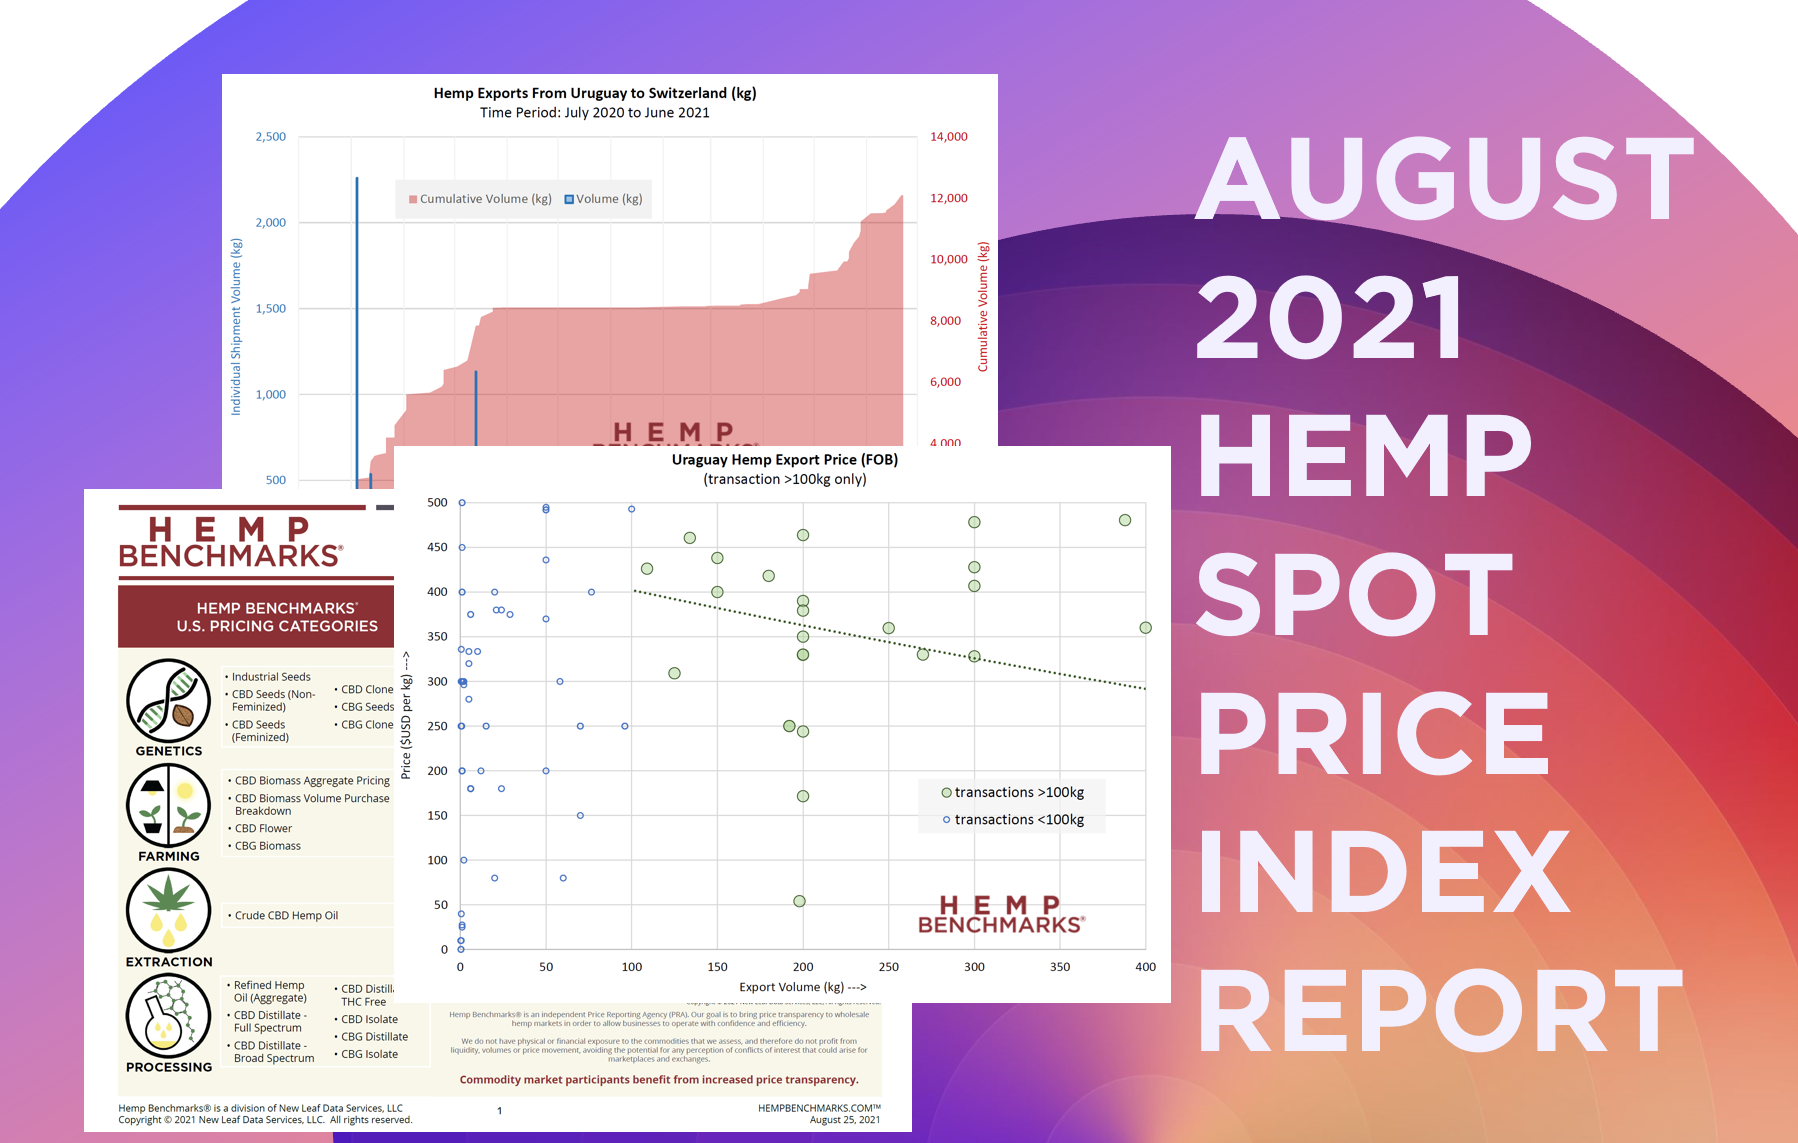 August 2021 Hemp Spot Price Index Report